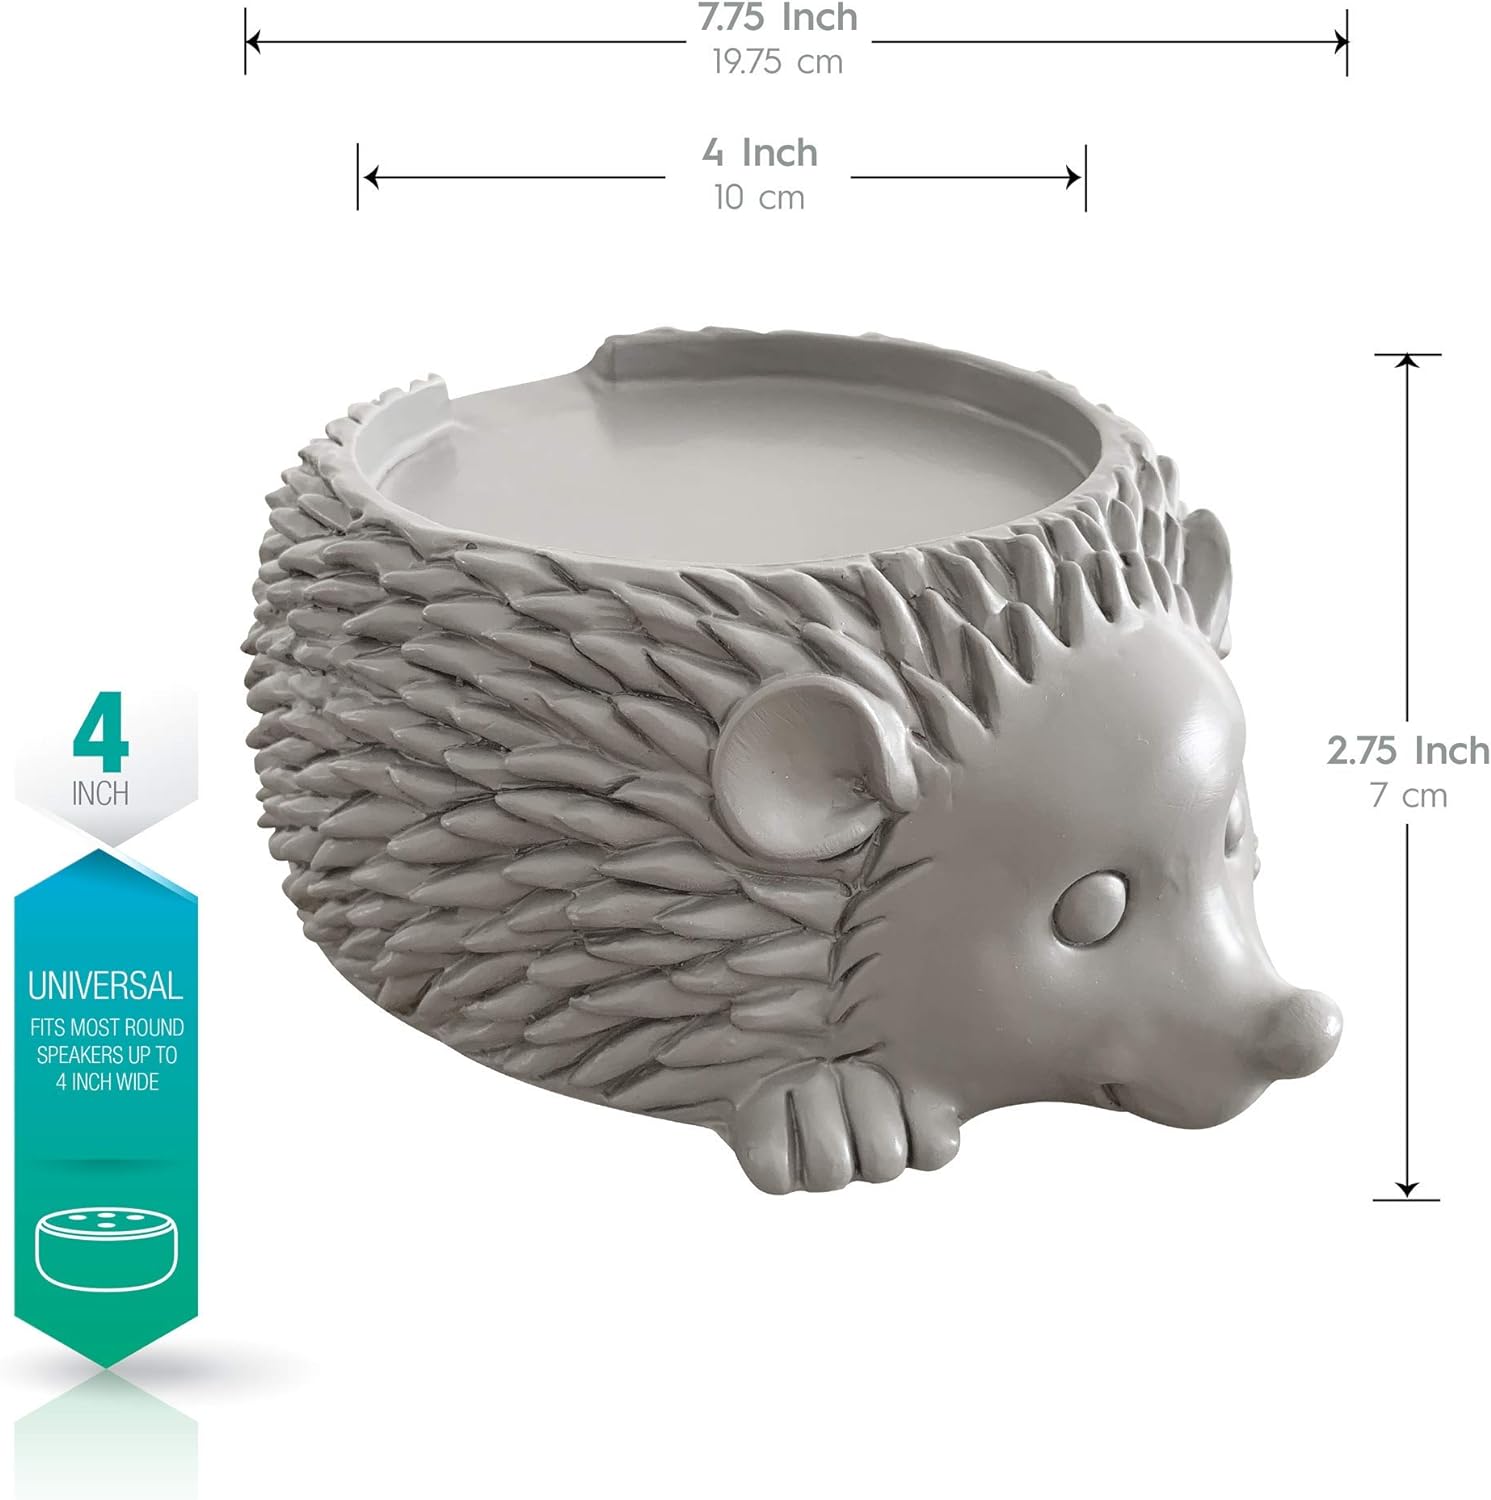 Dekodots Smart Speaker Table Stand (Hedgehog) - The Perfect Decorative Holder for Your Smart Speaker